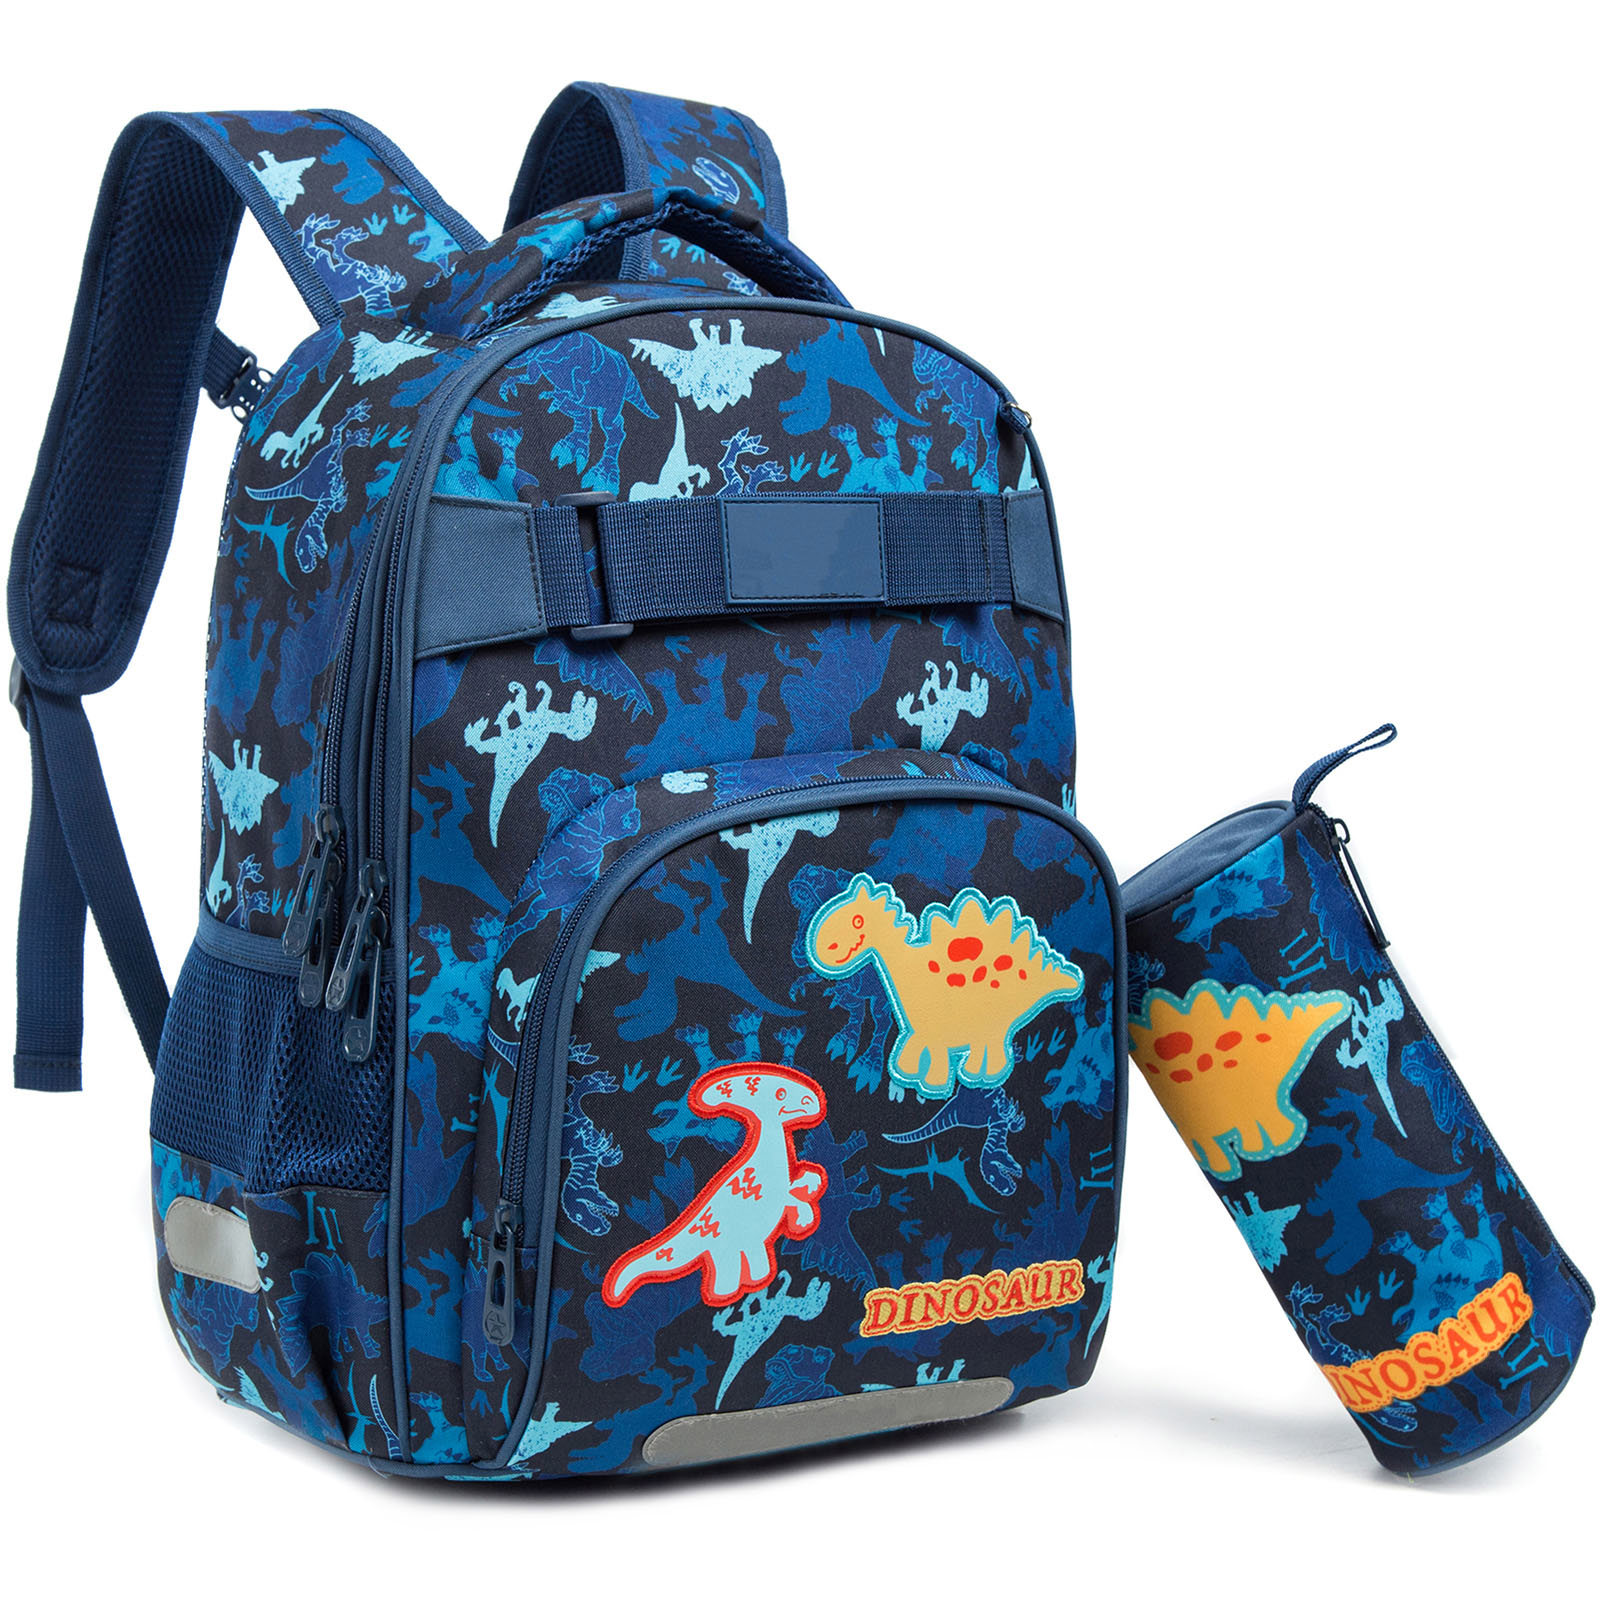 lvyH Kids School Backpack Unicorn Dinosaur Waterproof Schoolbag with Pencil Case Boys Girls Travel Outdoor,Blue - image 1 of 8